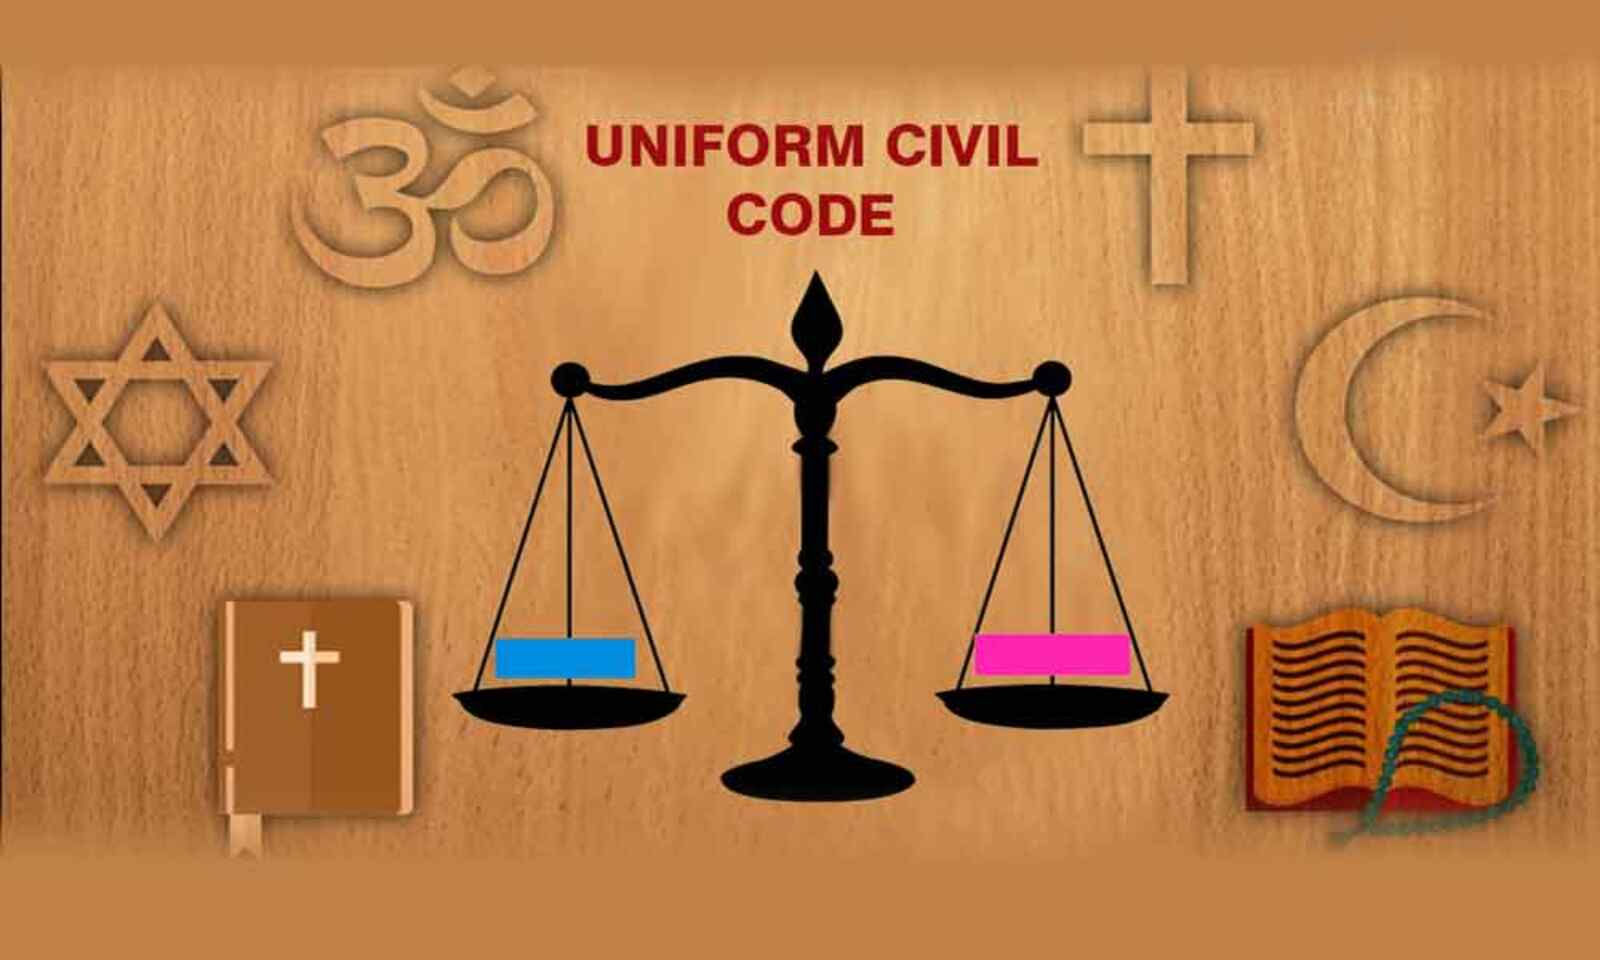 PM Modi Slams Opposition Over Uniform Civil Code - Asiana Times